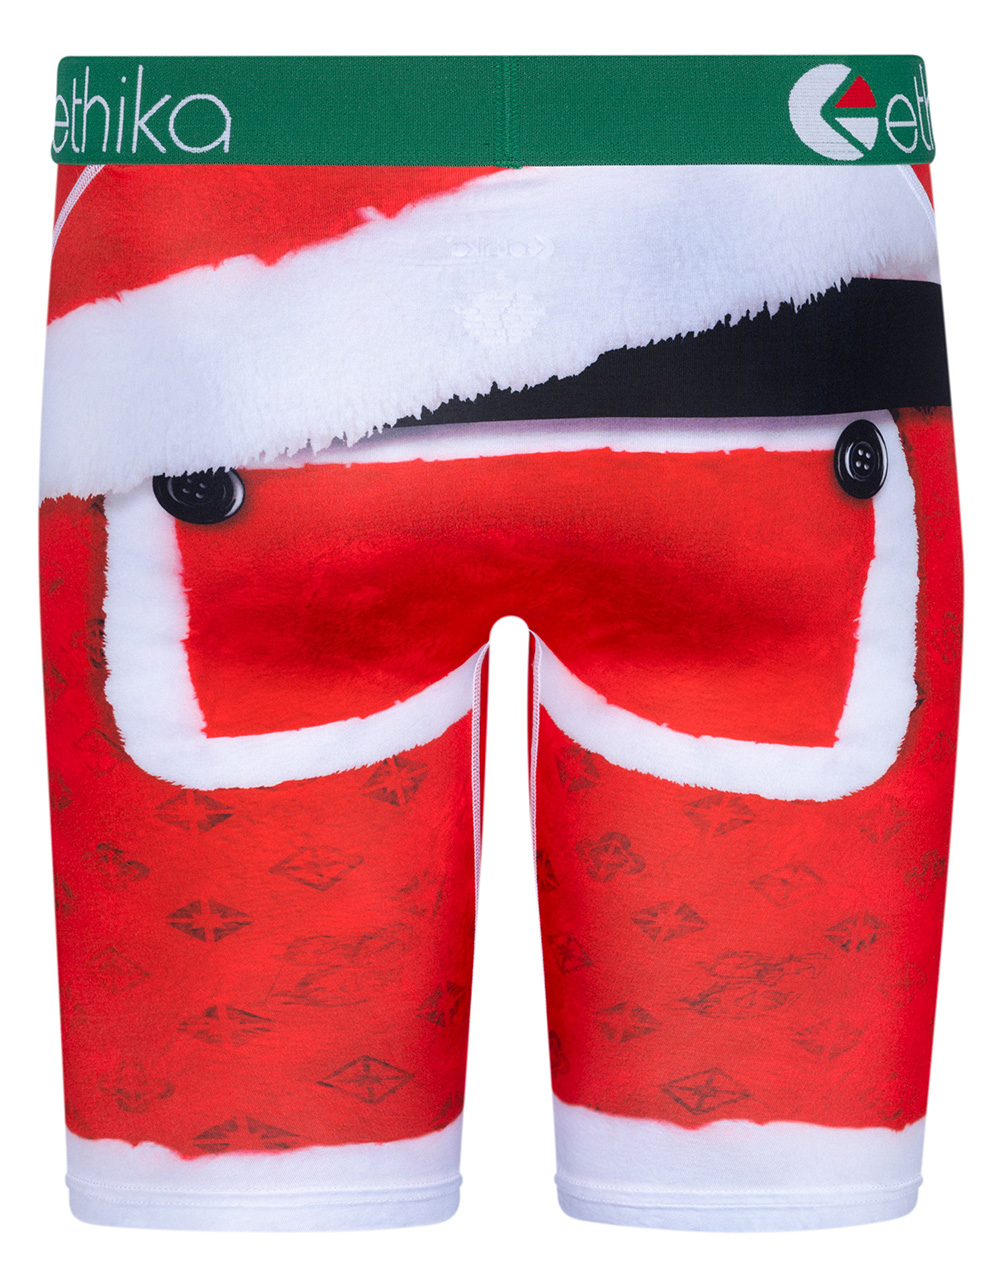 Christmas Underwear for Men Santa Sack Fun Novelty Gift Boxer